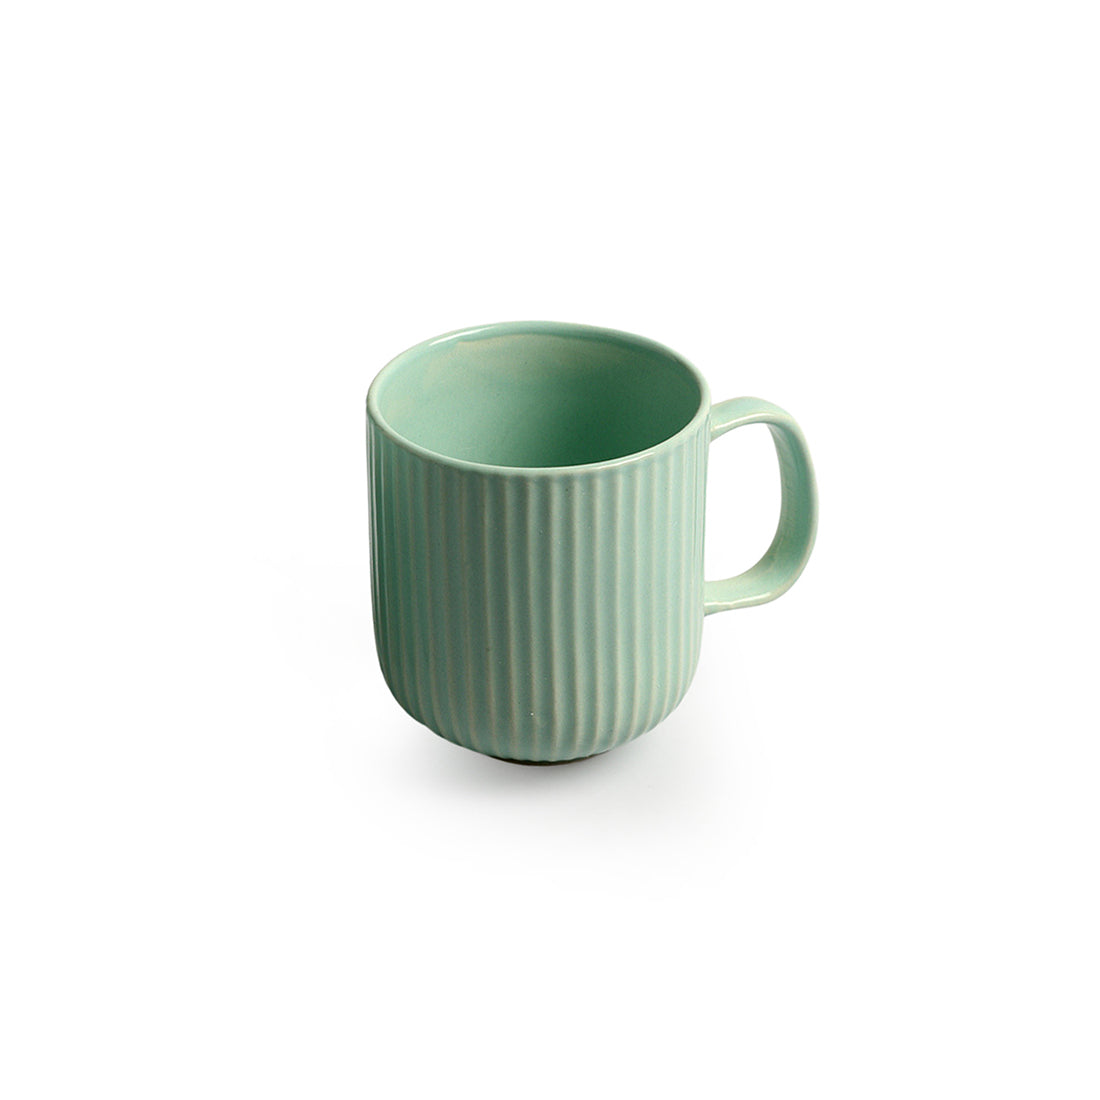 'Coral Reef' Glazed Studio Pottery Ceramic Tea & Coffee Mugs (Set of 2, 300 ml, Light Green)